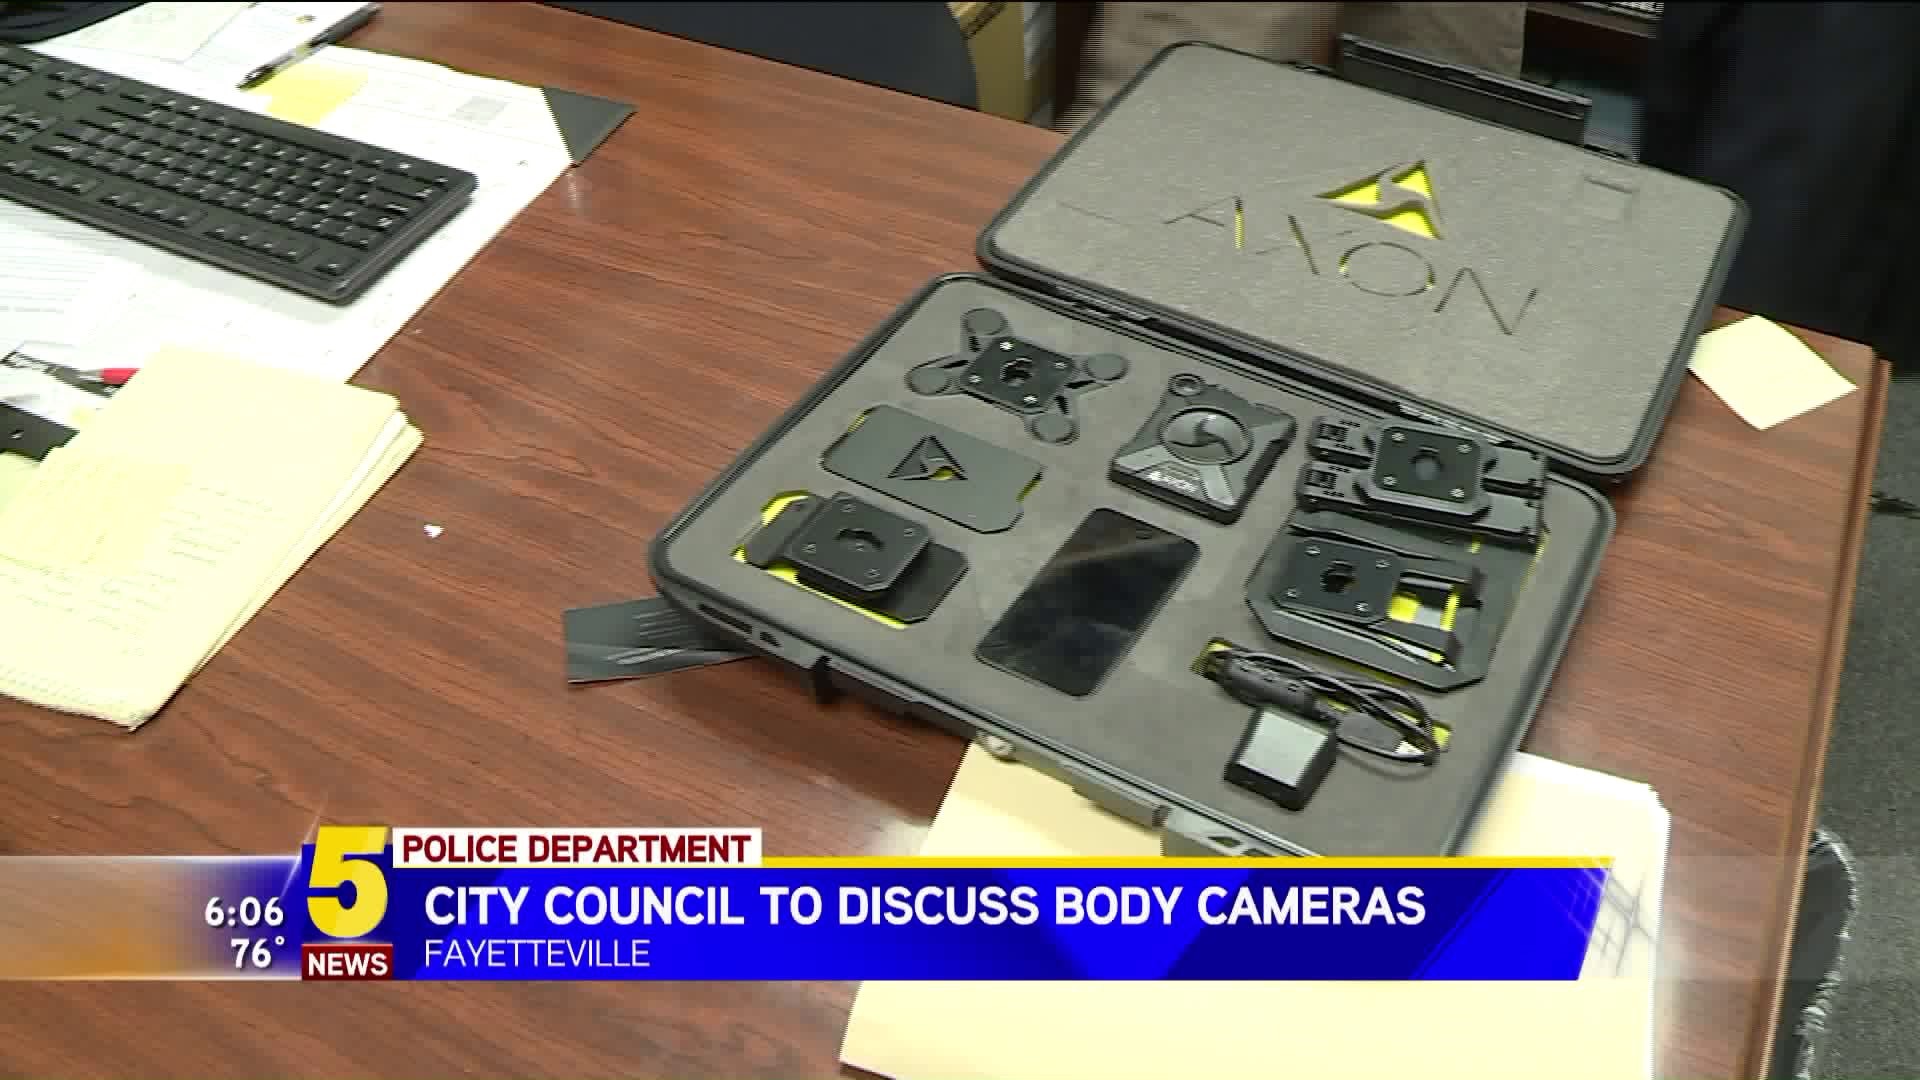 City Council To Discuss Body Cameras